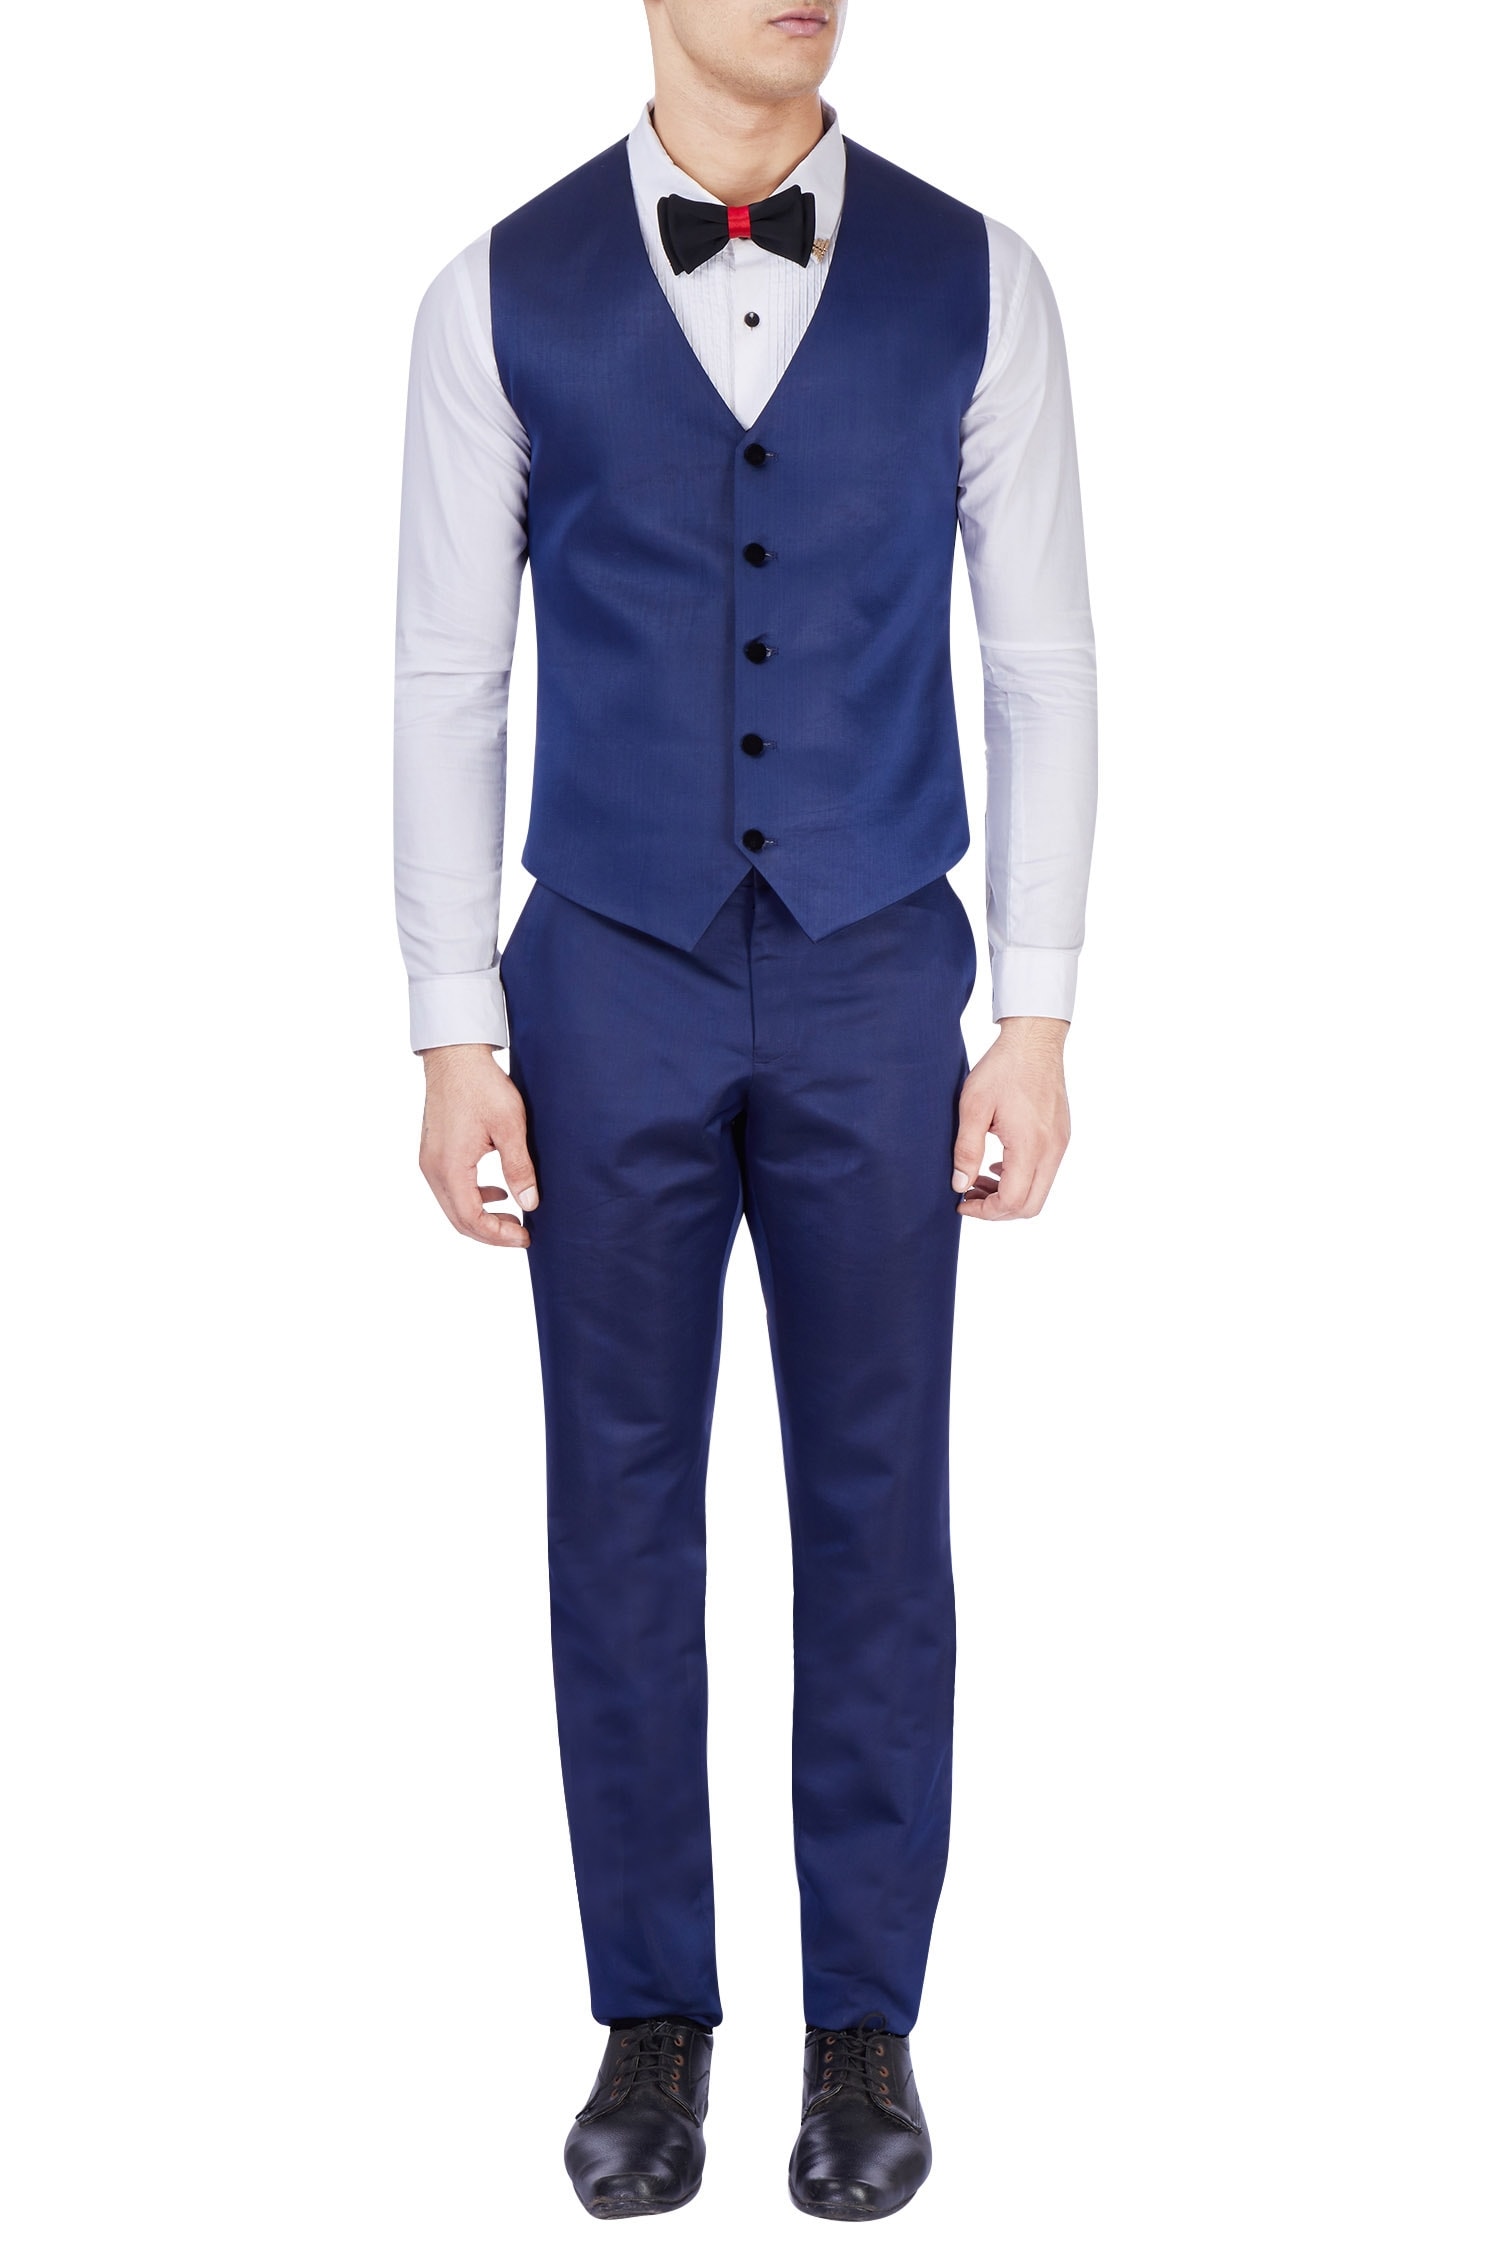 Buy Royal blue tuxedo jacket set by SOL by Piyush Dedhia at Aza Fashions